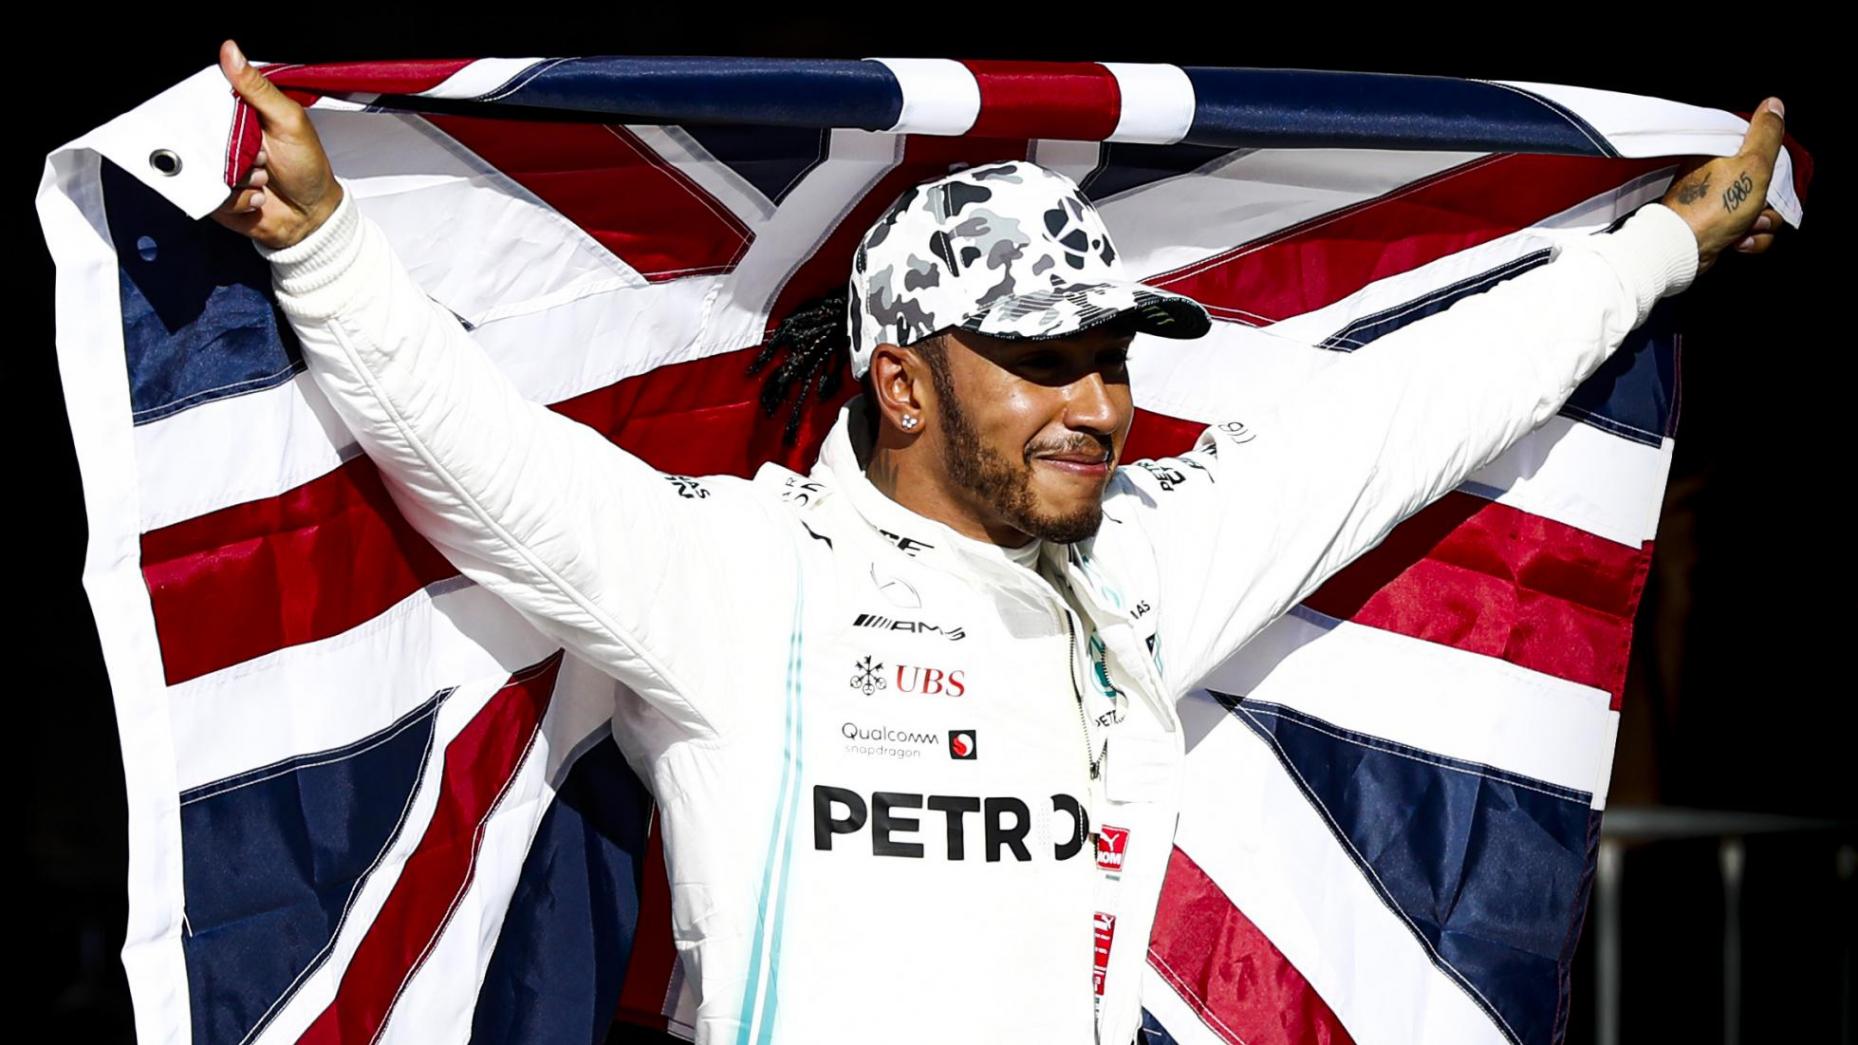 6. Lewis Hamilton jumps ship to Mercedes (2013)